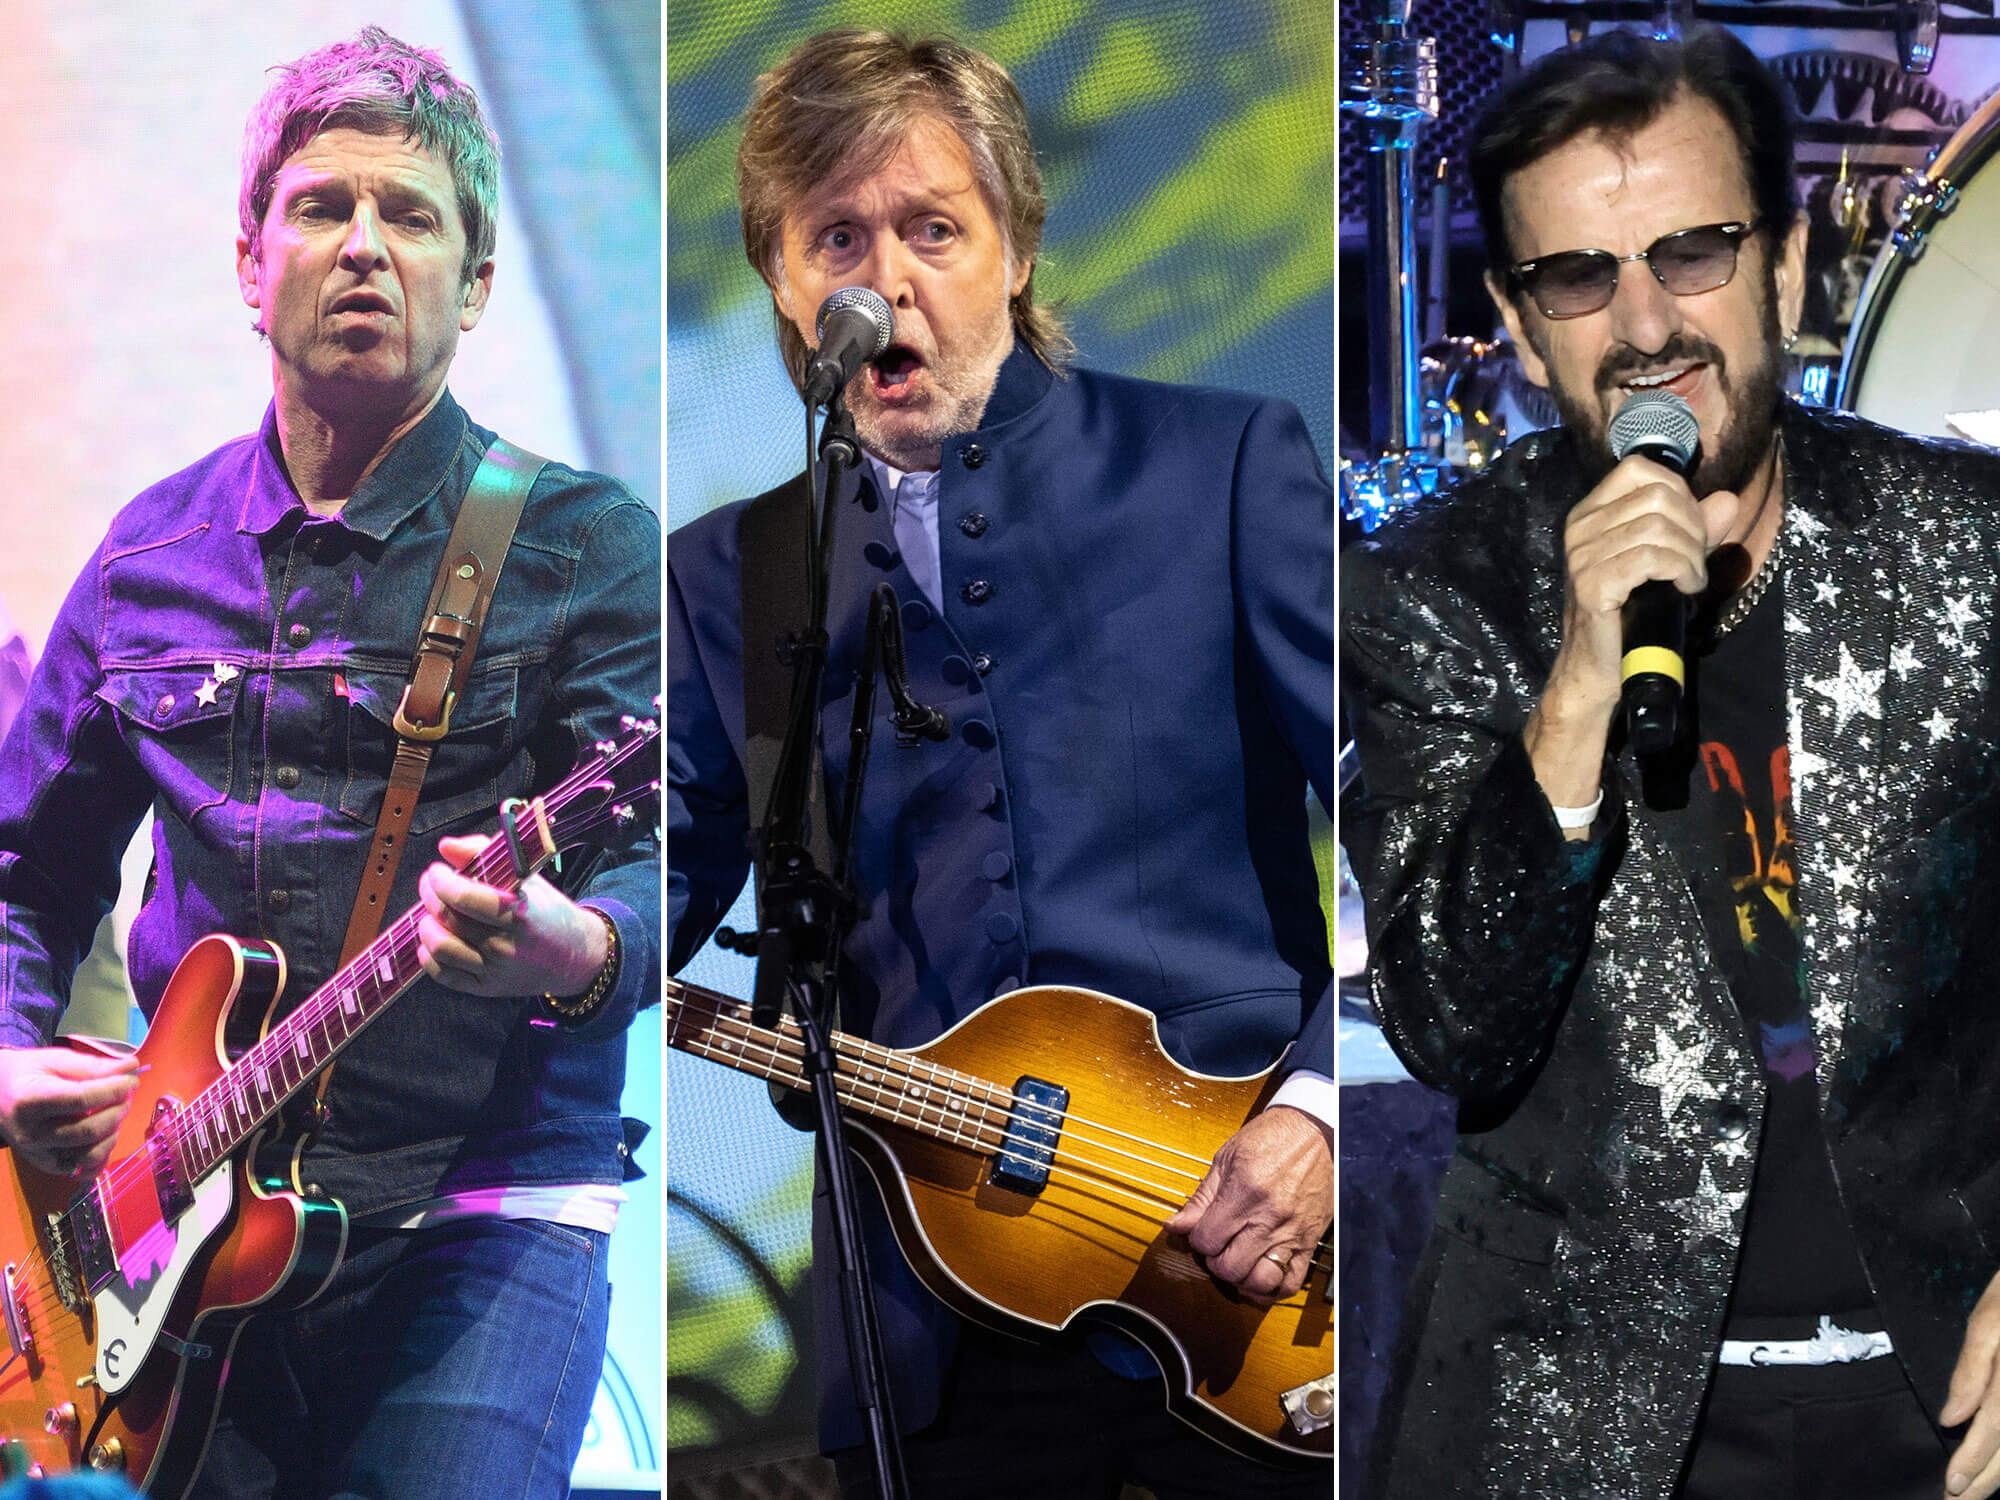 [L-R] Noel Gallagher, Paul McCartney and Ringo Starr